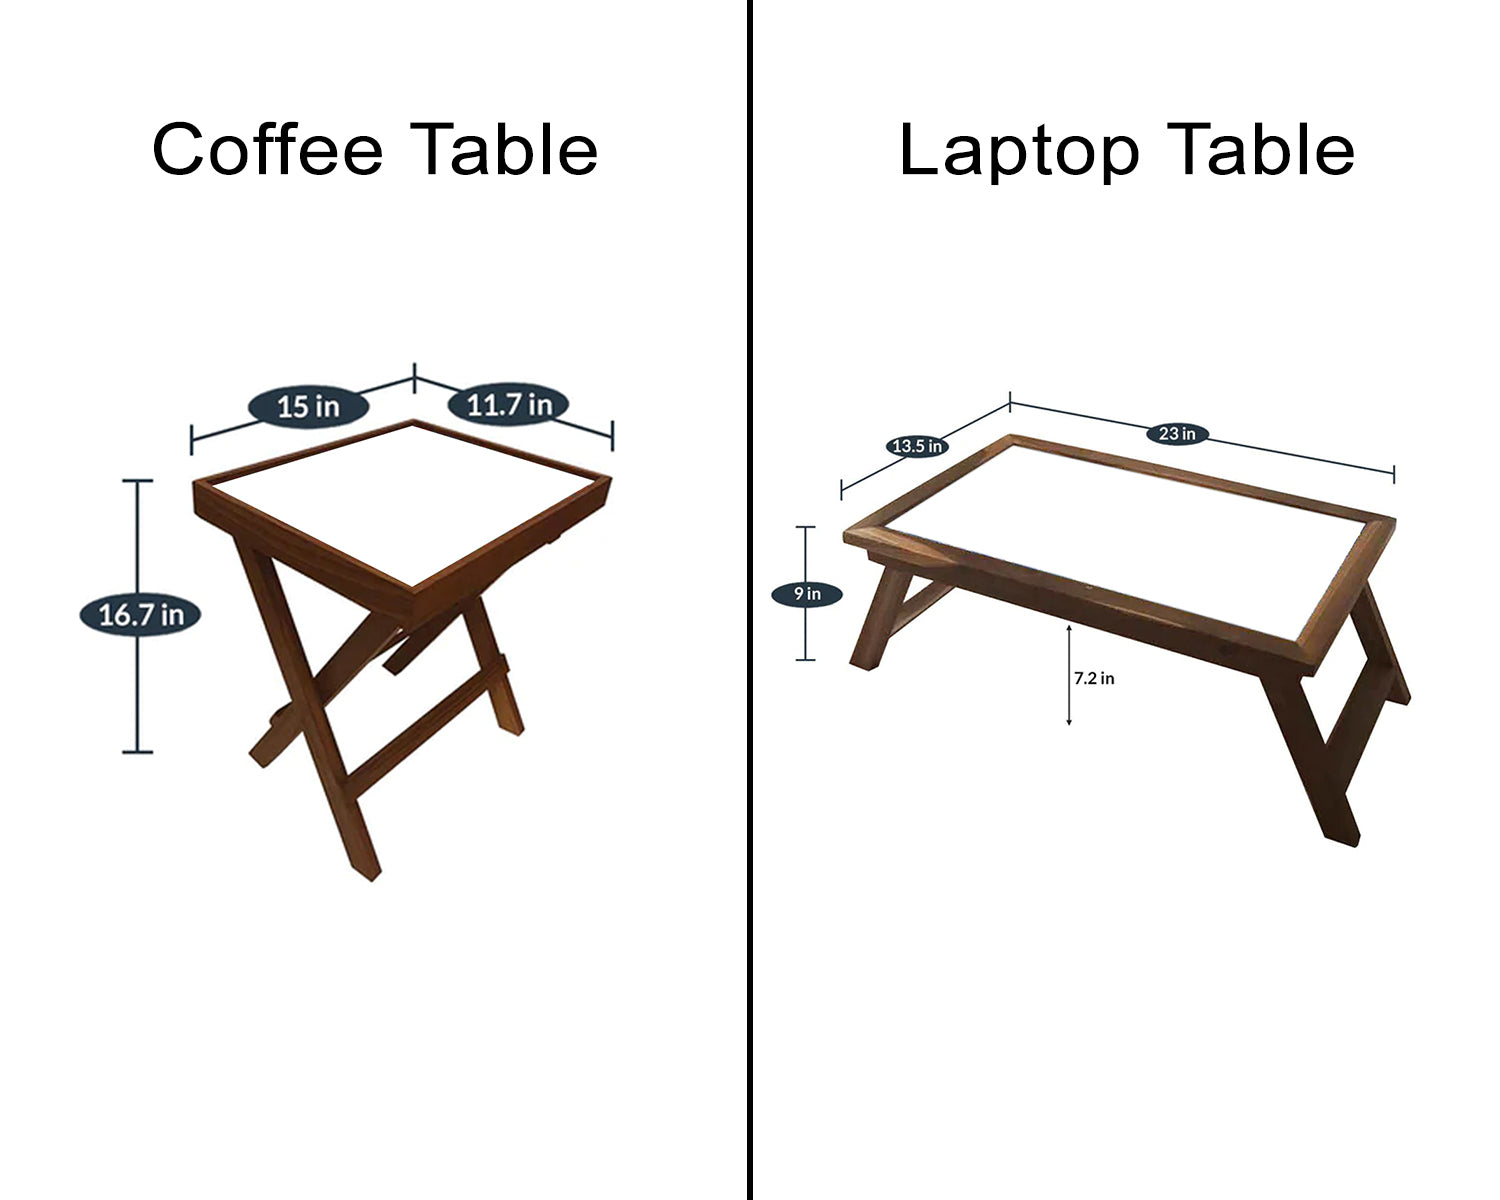 Xander Schauffele Splash Effect Coffee and Laptop Table 